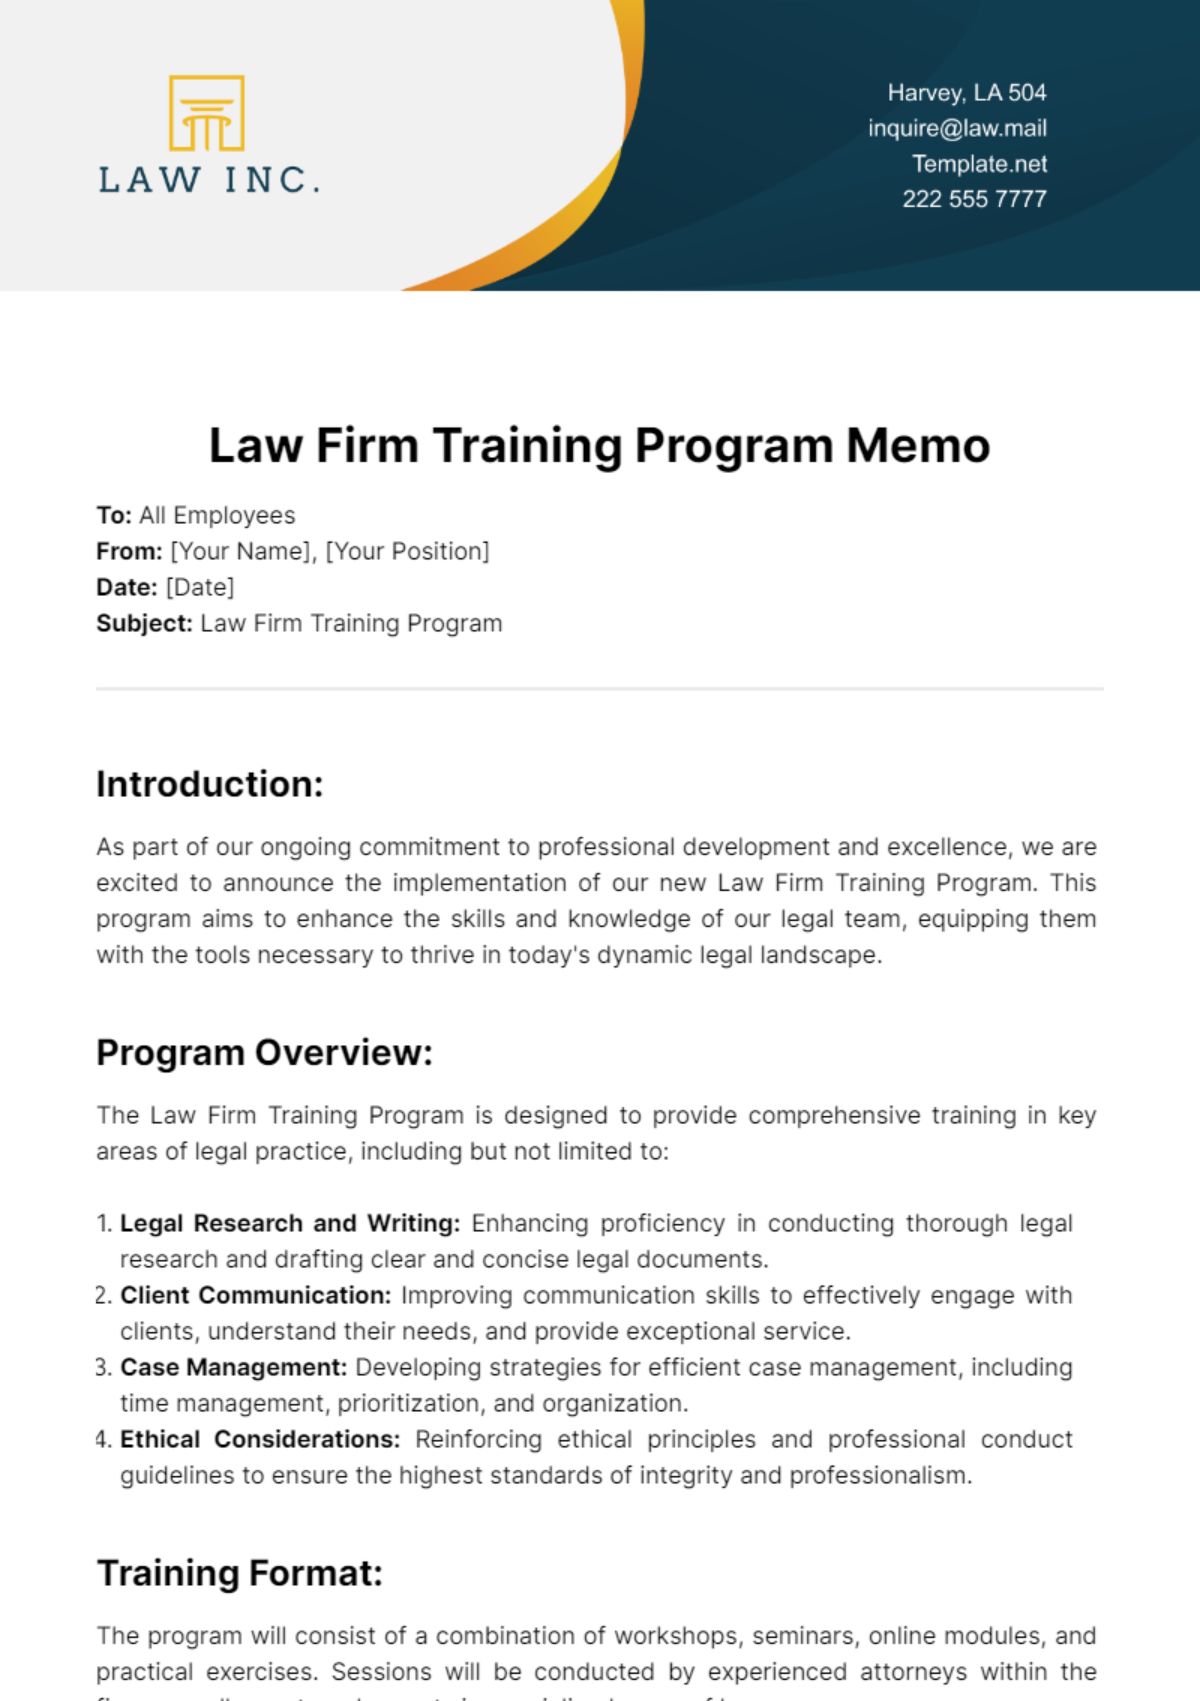 Free Law Firm Training Program Memo Template